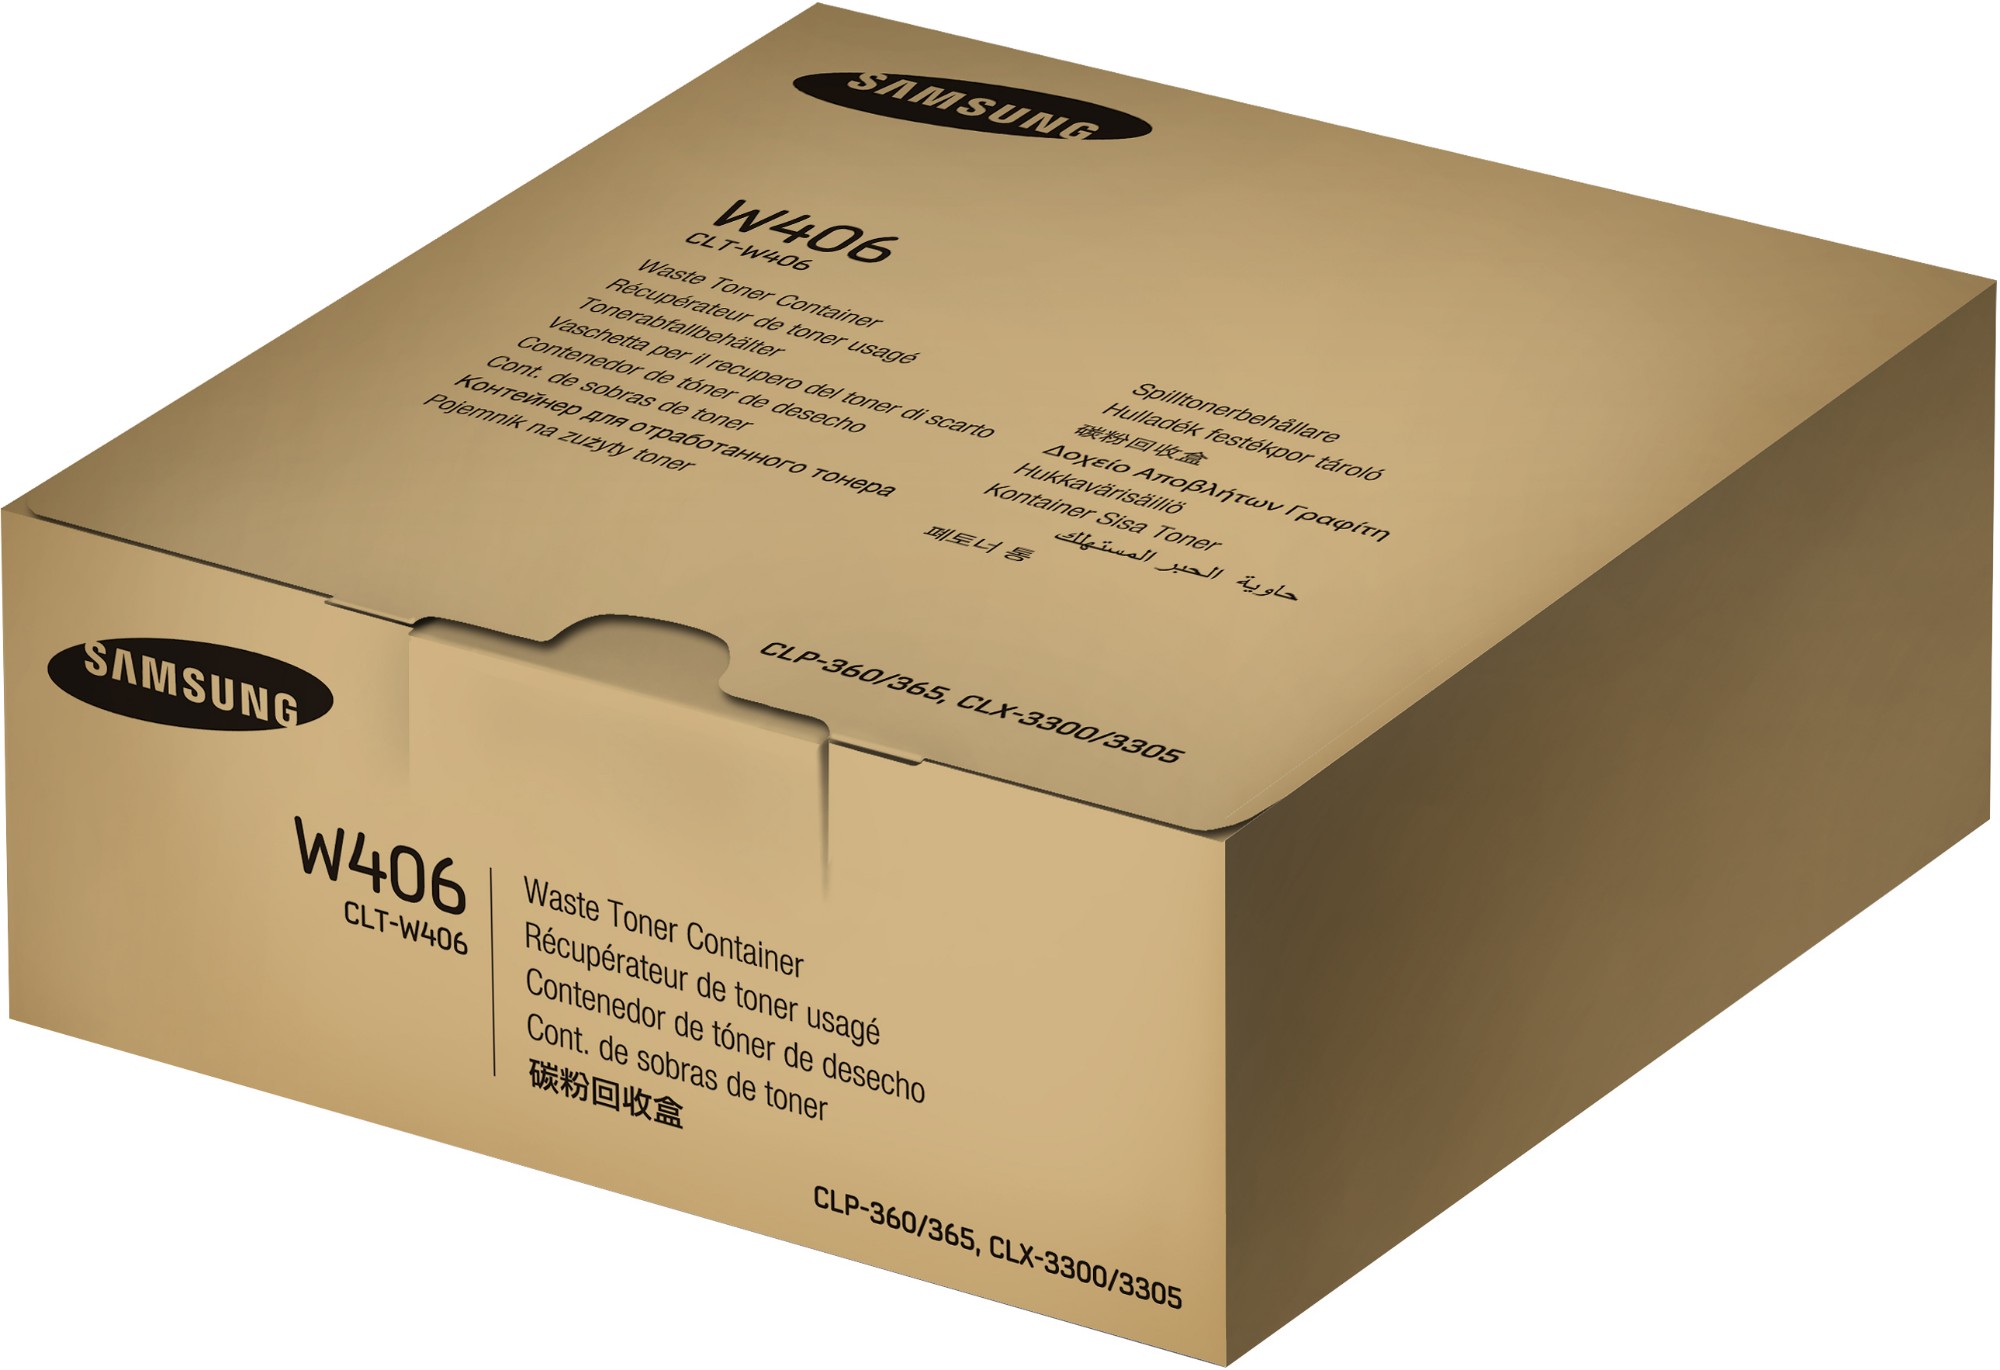 HP SU426A|CLT-W406 Toner waste box 1750bk/7000 color for Samsung C 430/CLP-360